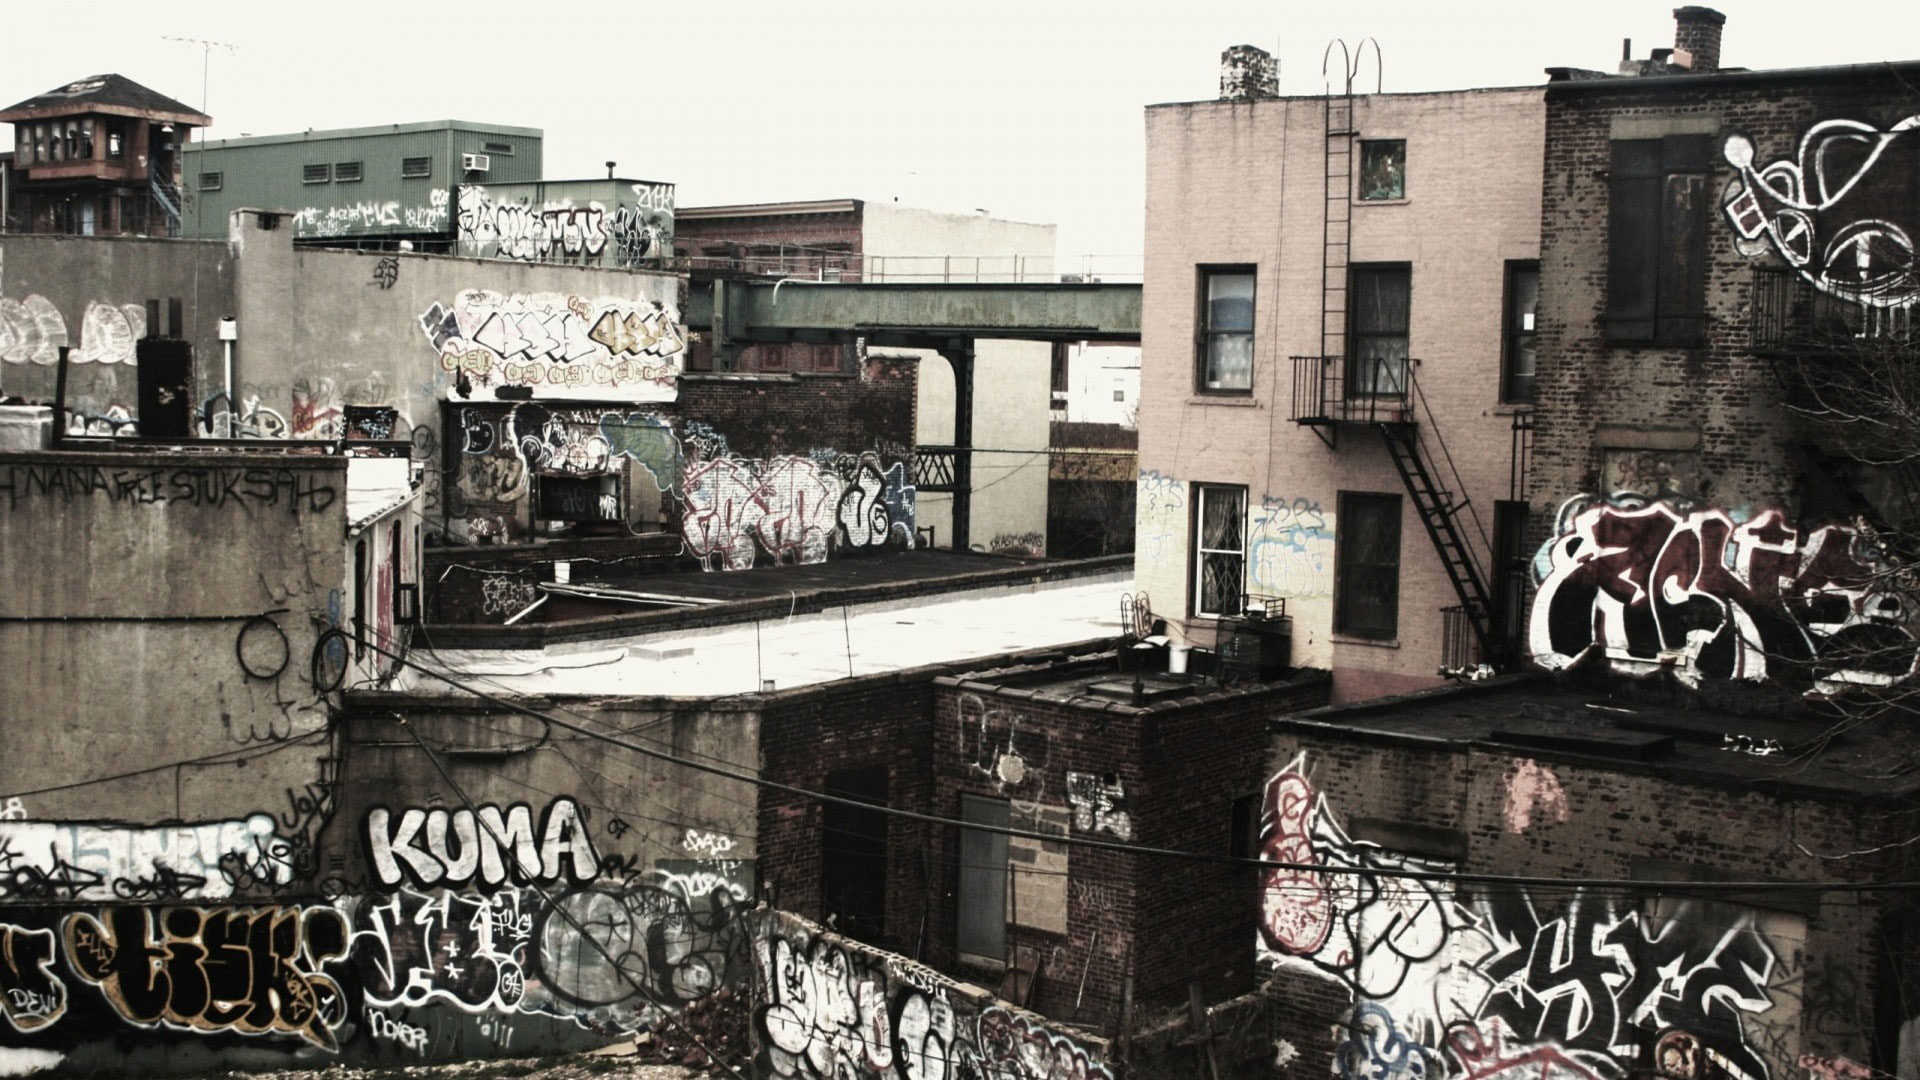 Ghetto wallpaper, city, architecture, built structure, building exterior